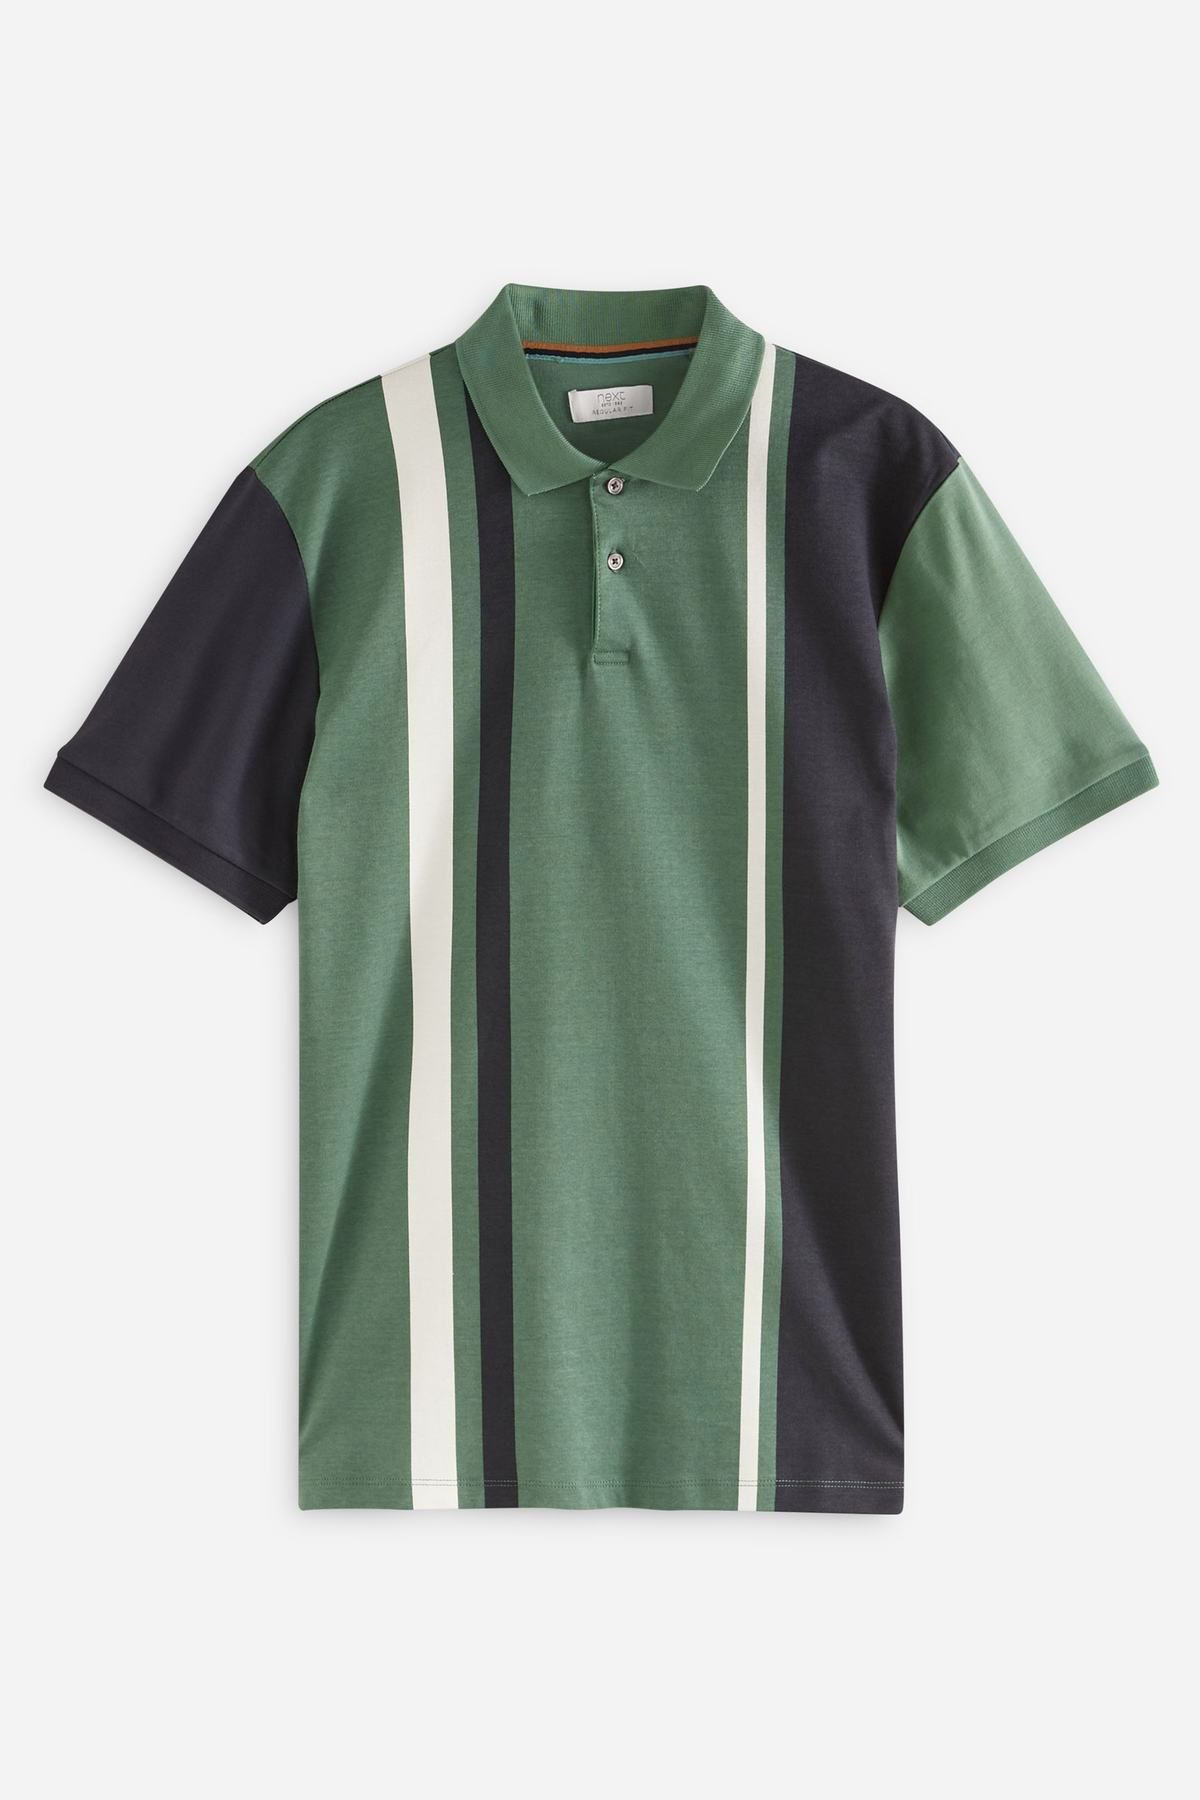 NEXT Vertical Block Polo Shirt Sage Green/Navy Blue Men